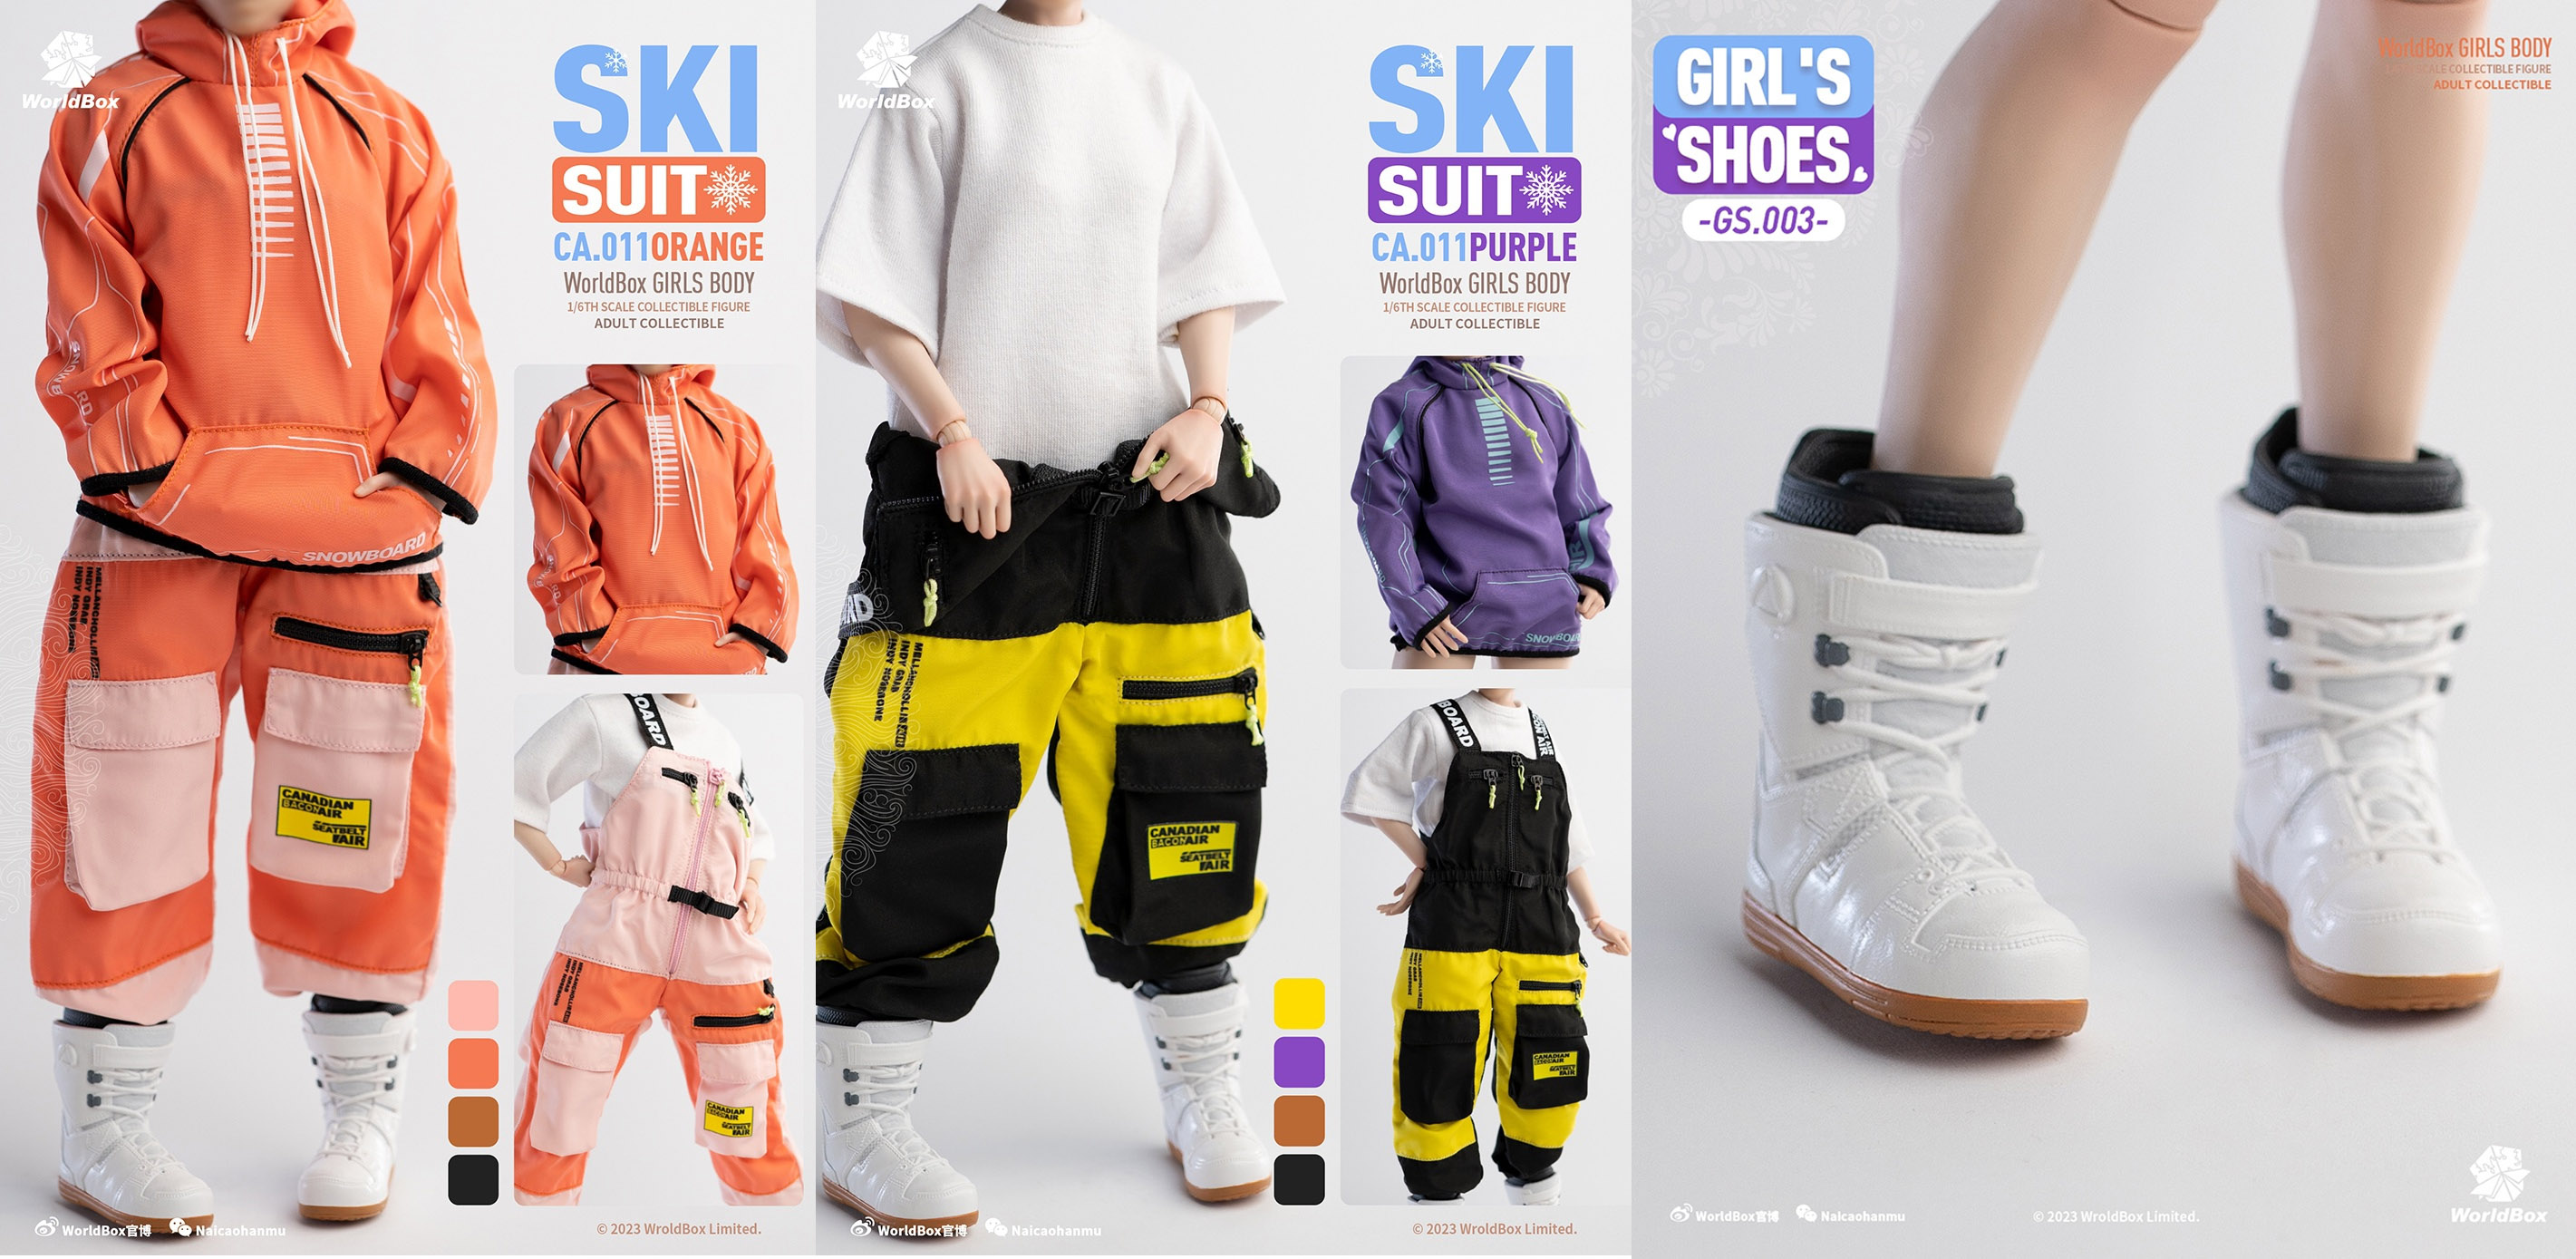 NEW PRODUCT: Worldbox Winter Snow Wear Orange Purple Suit CA011 & Ski Shoes GS003 0028